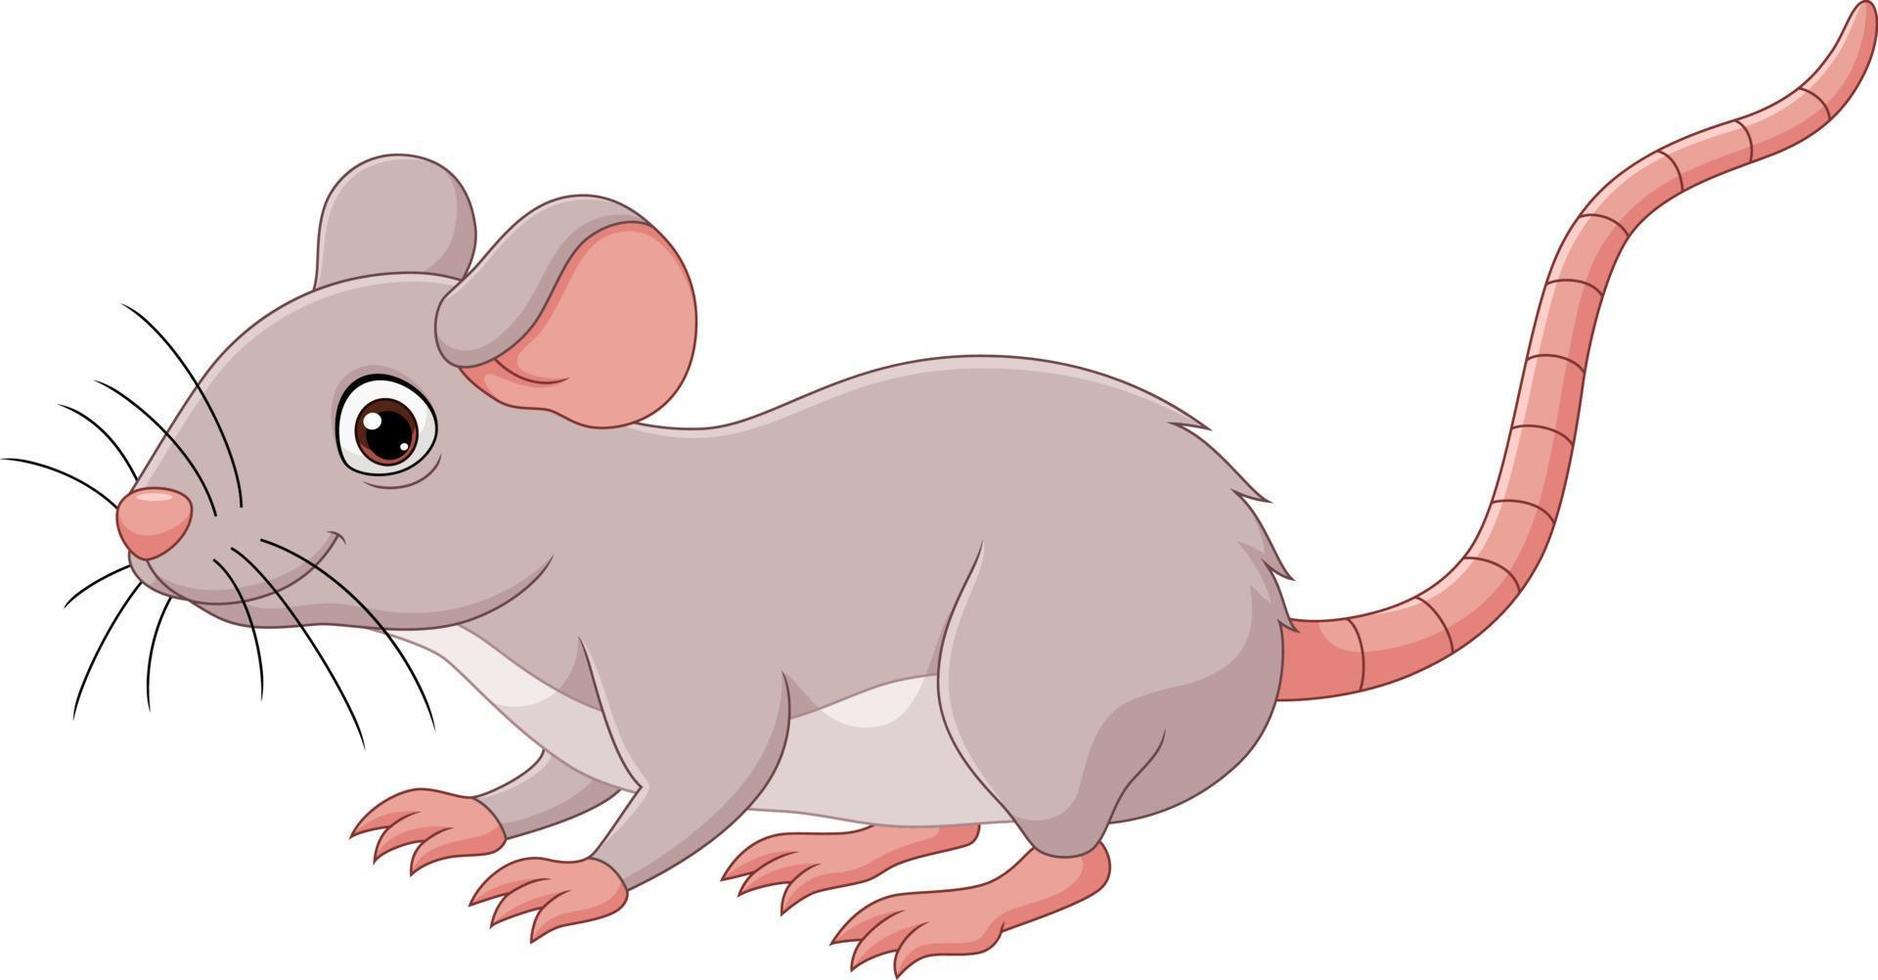 rato bonito dos desenhos animados no fundo branco vetor